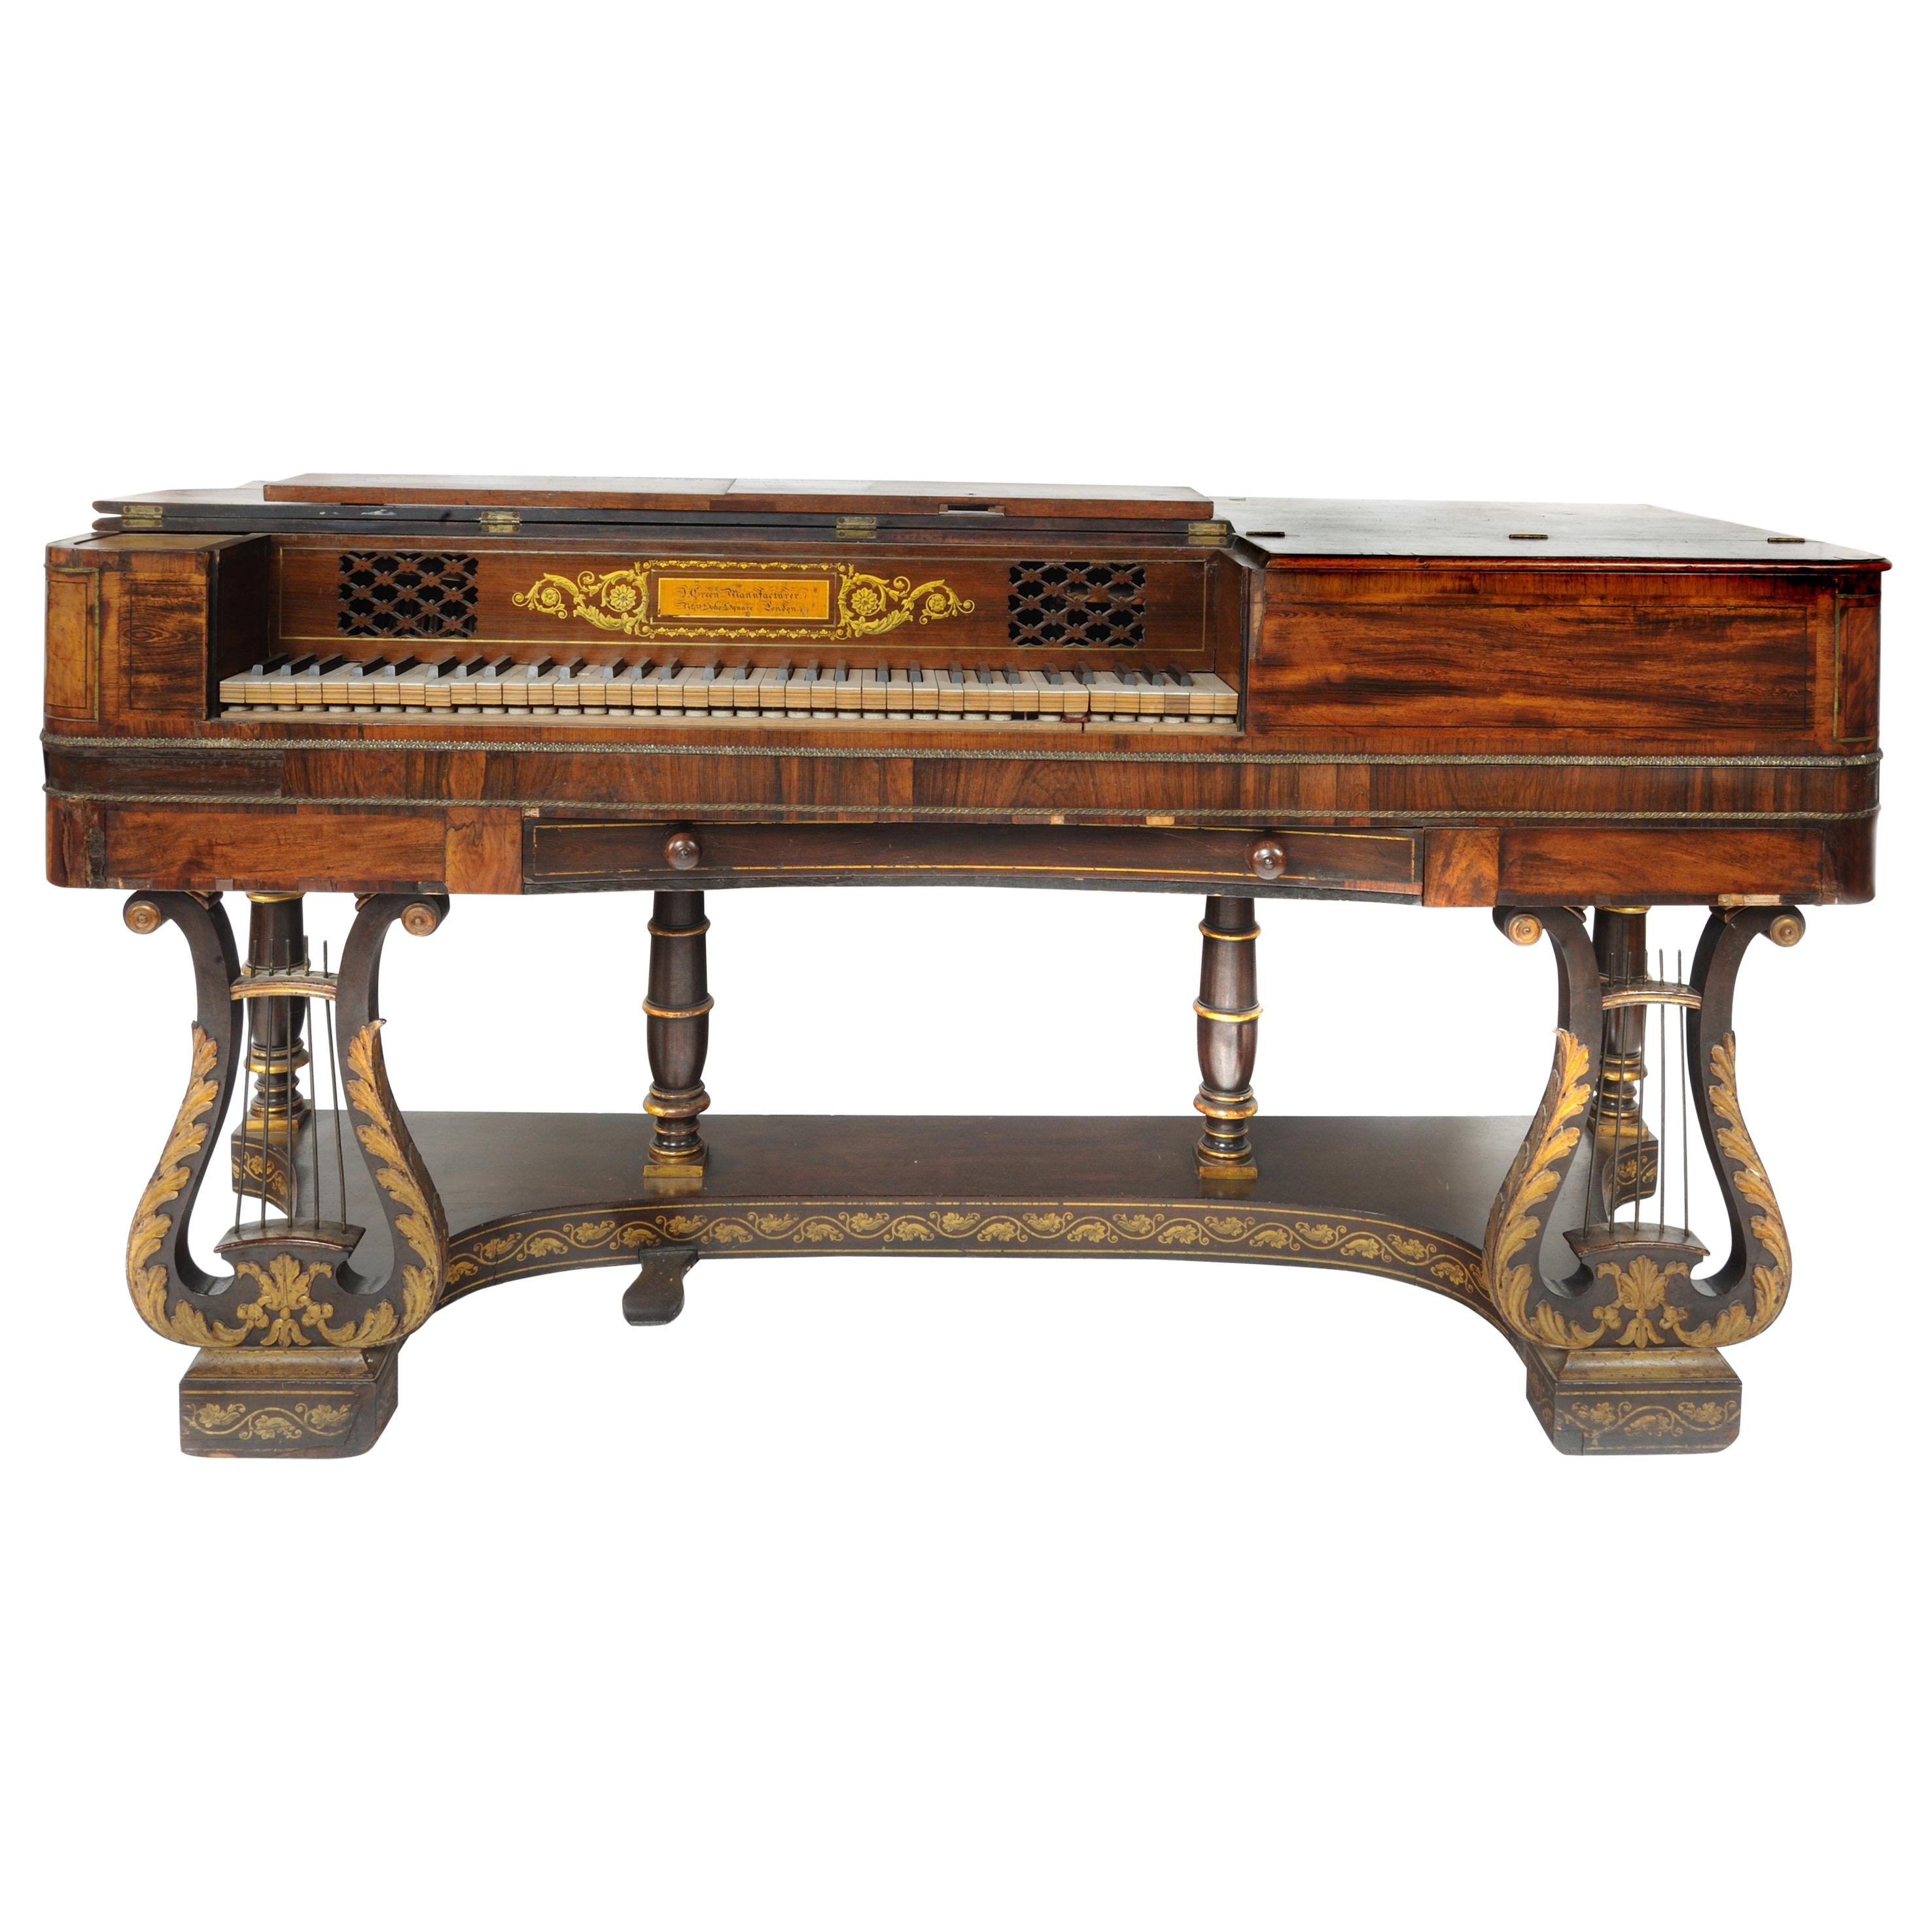 19th Century English Regency Piano-Forte